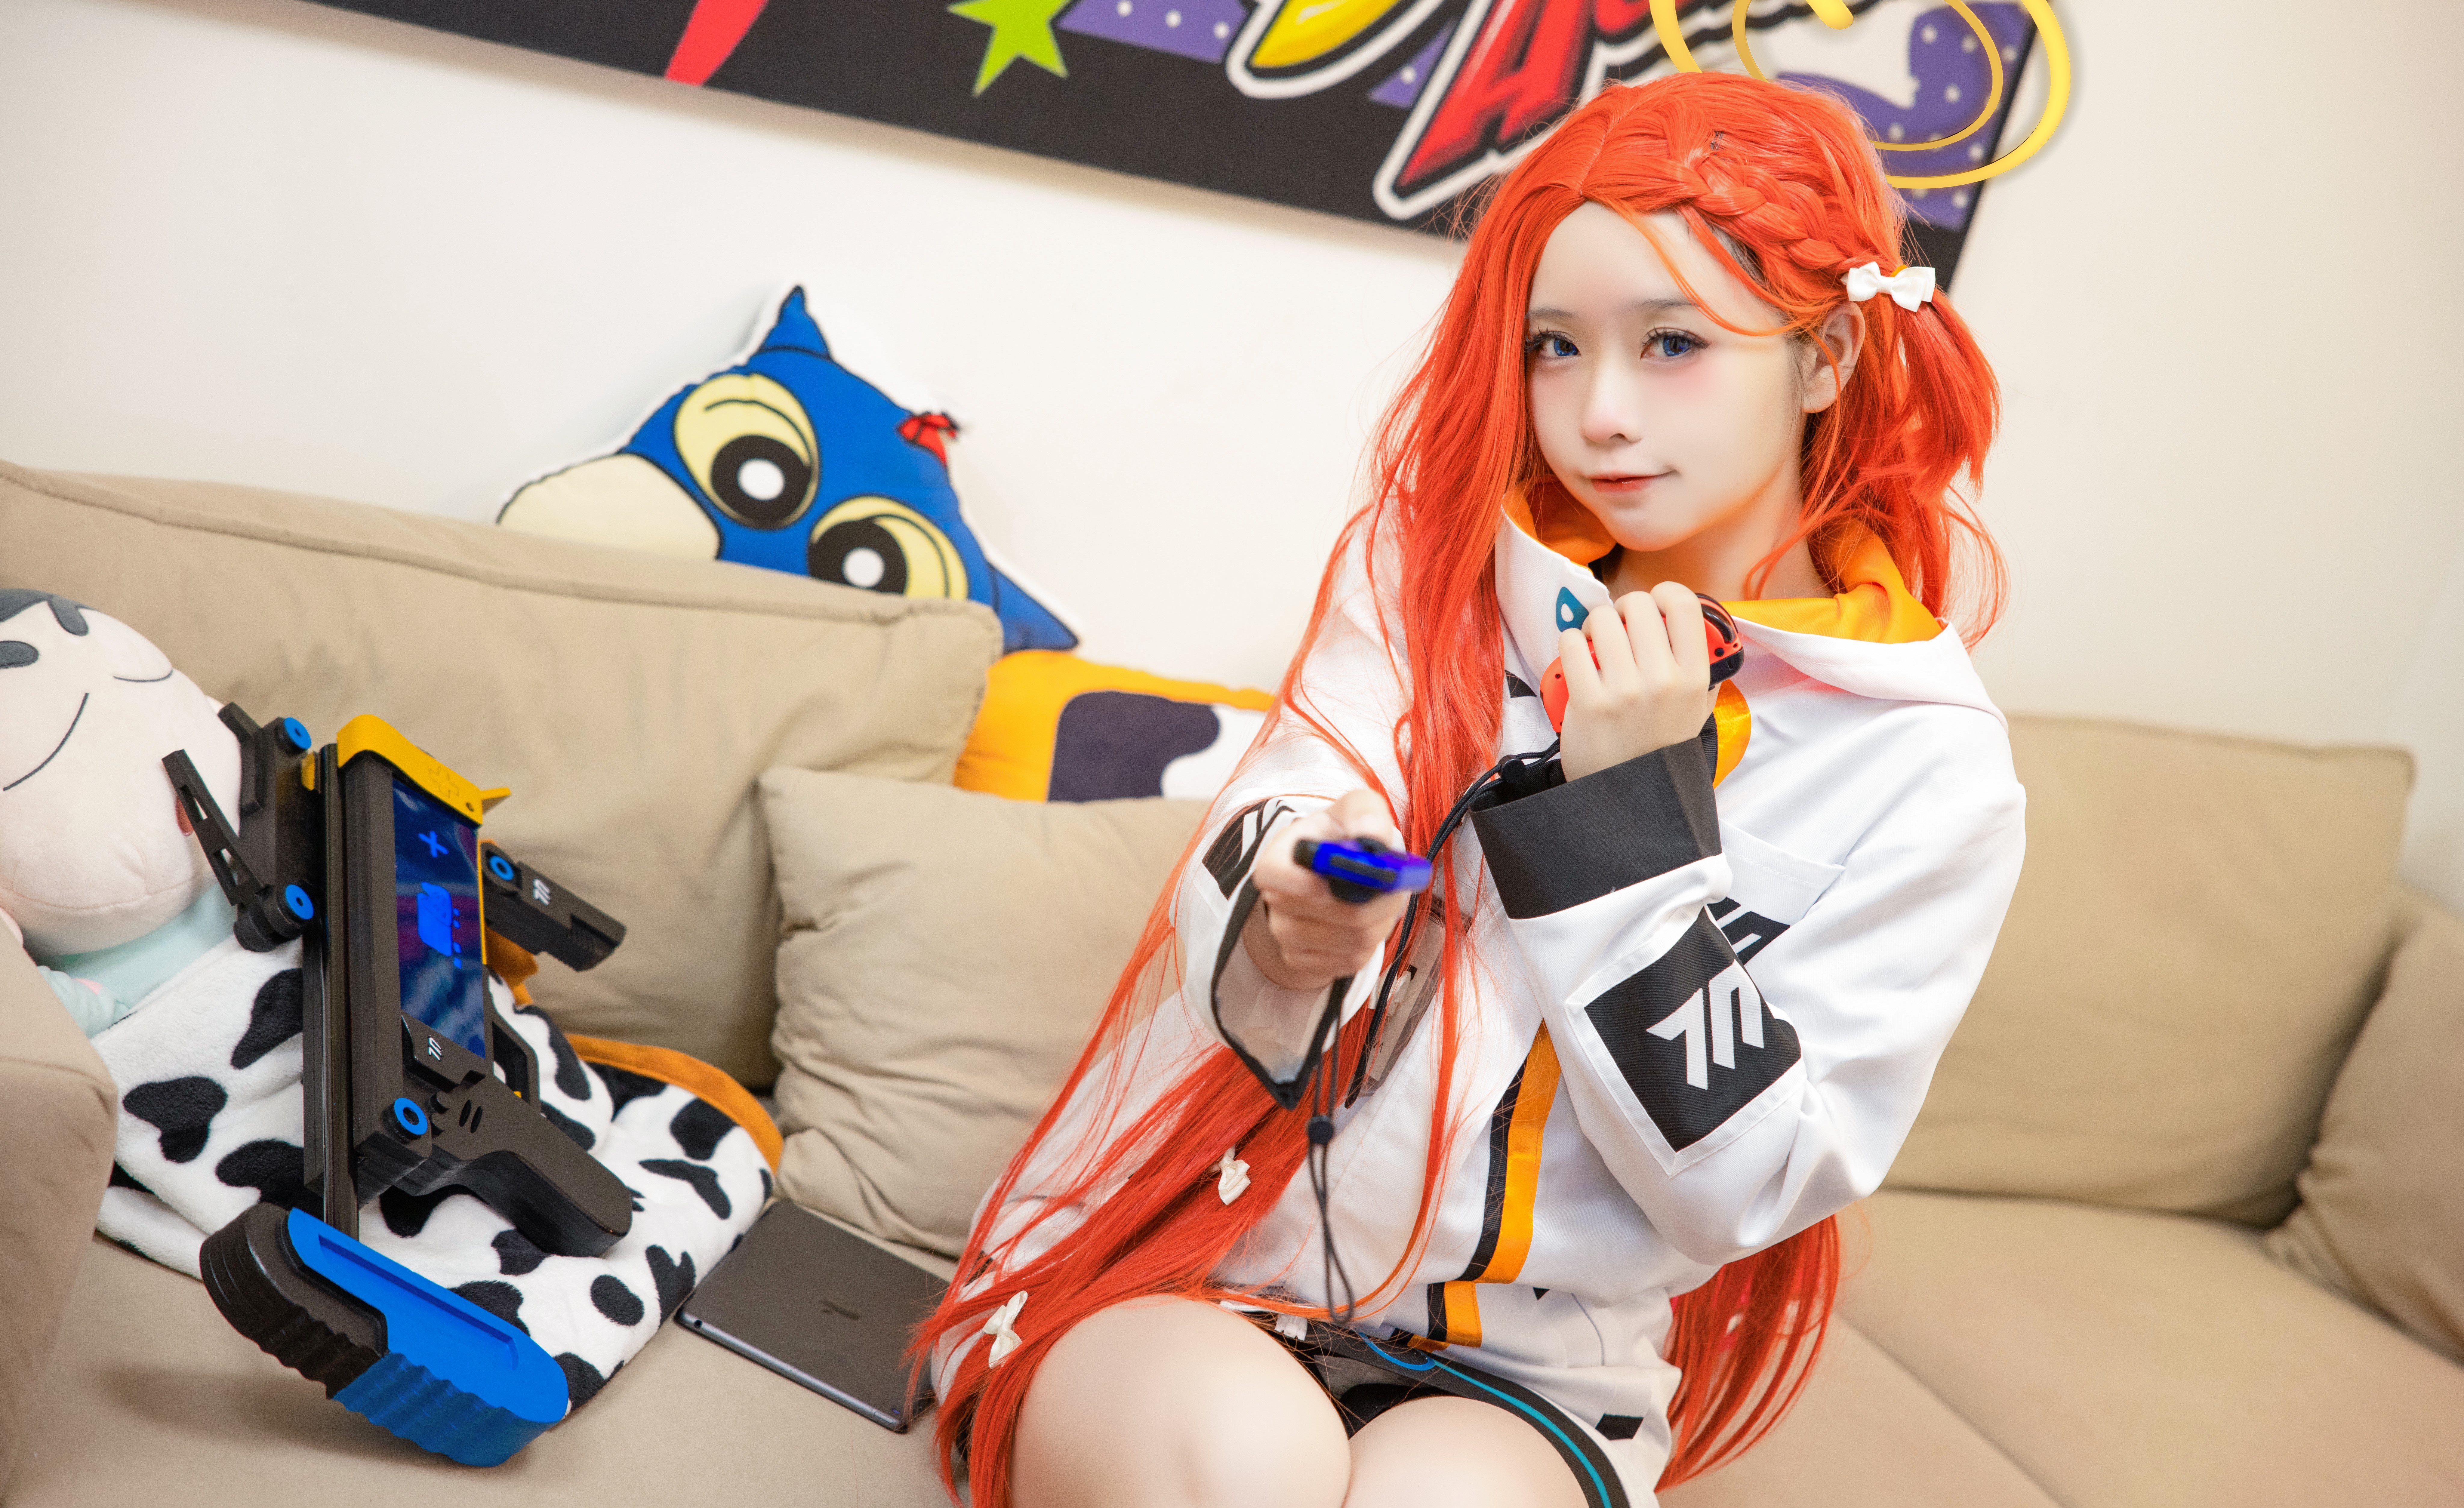 People 8192x5014 G44 (Model) Hanaoka Yuzu couch Nintendo Switch looking at viewer long hair Asian